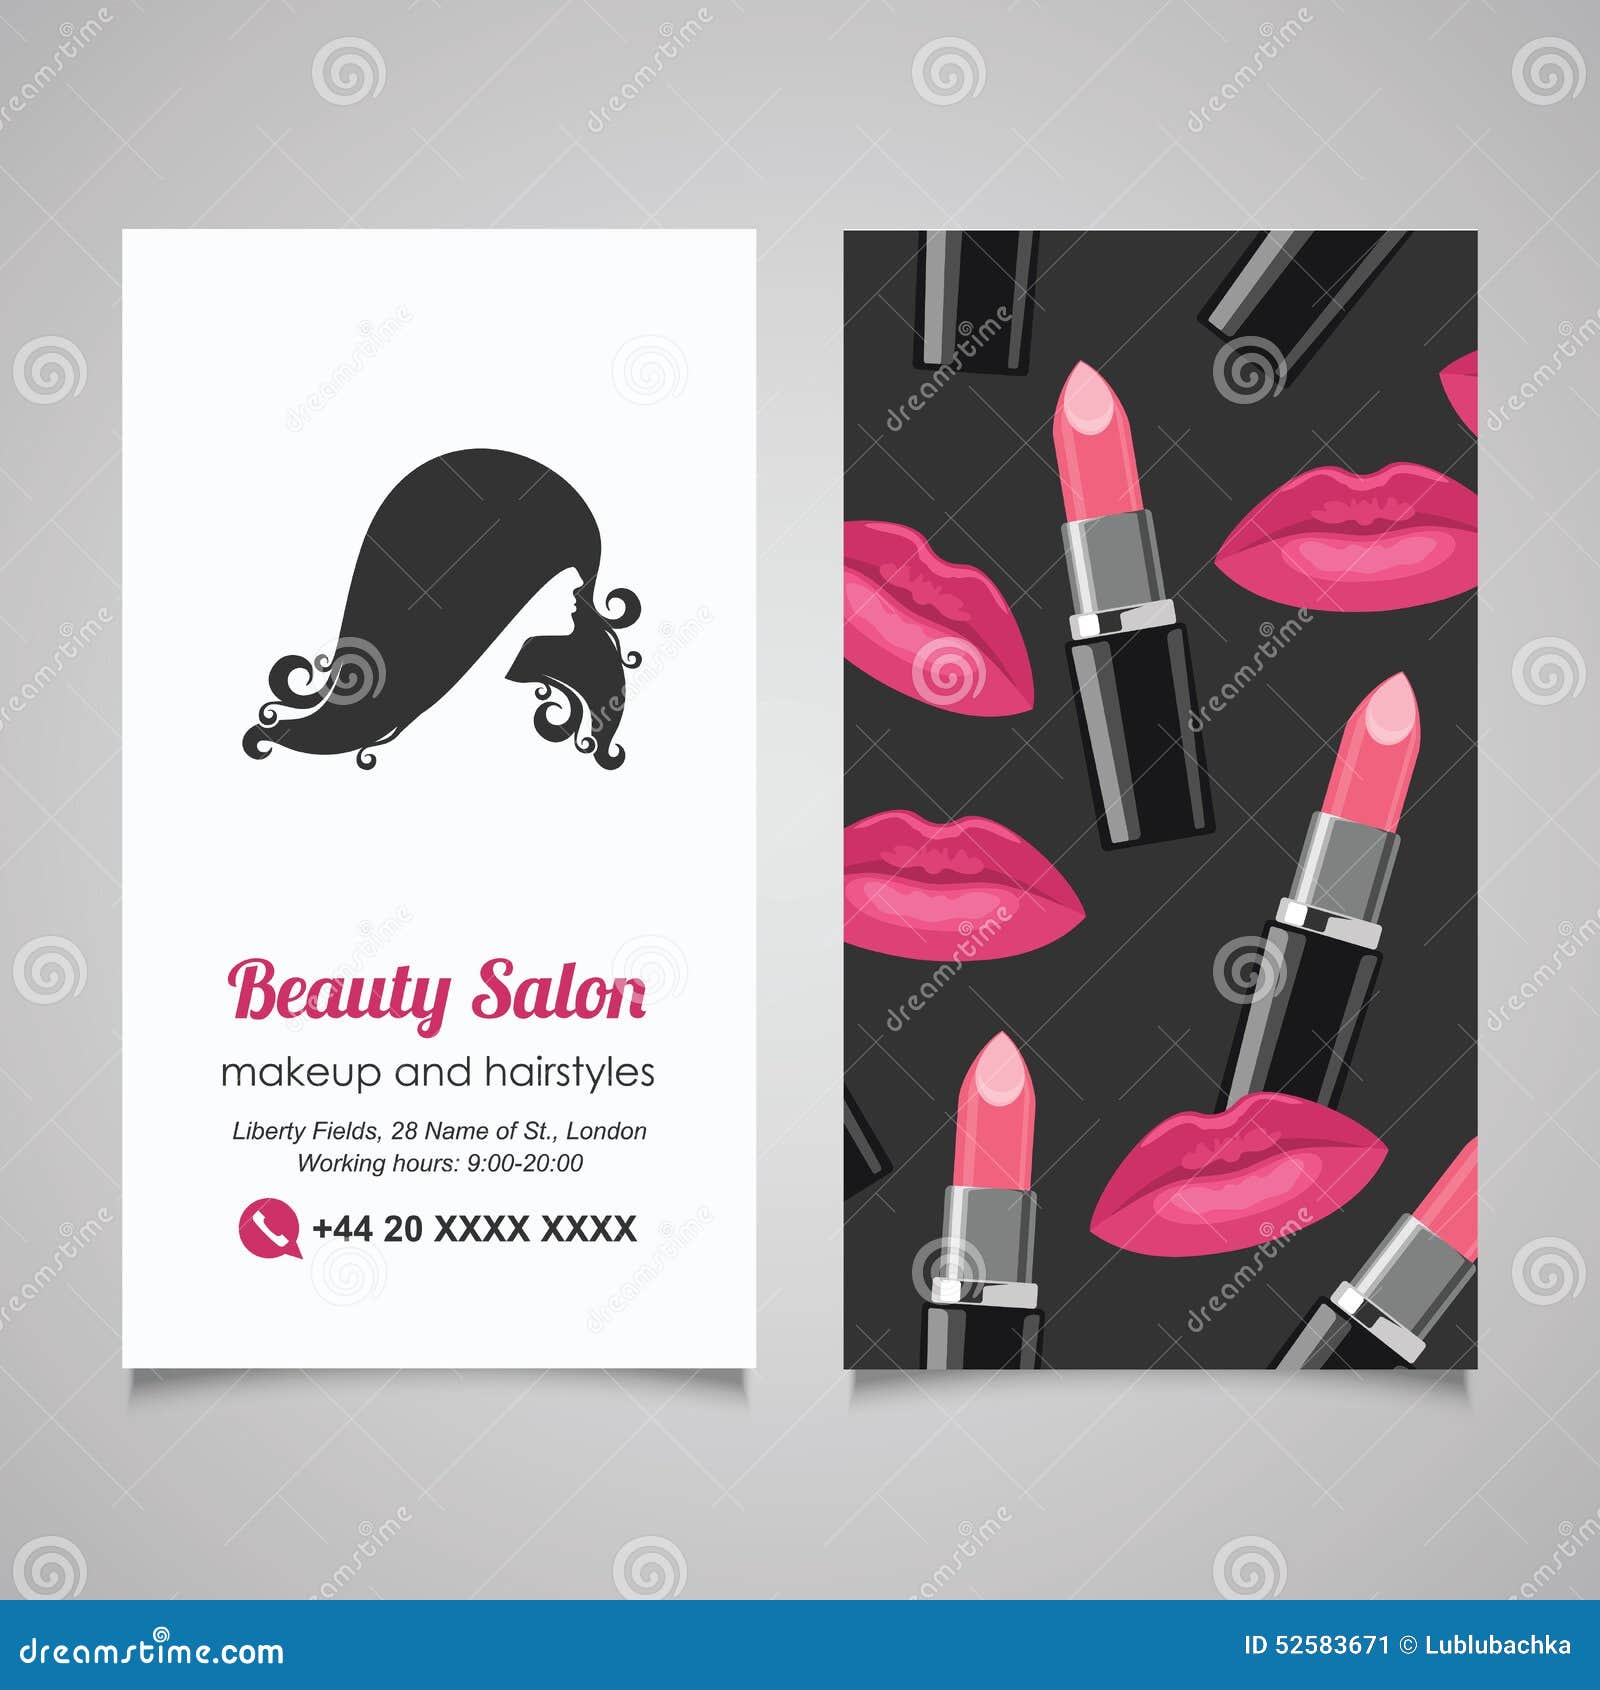 Beauty Salon Business Card Design Template with Beautiful Woman Stock  Vector - Illustration of makeup, lipstick: 52583671